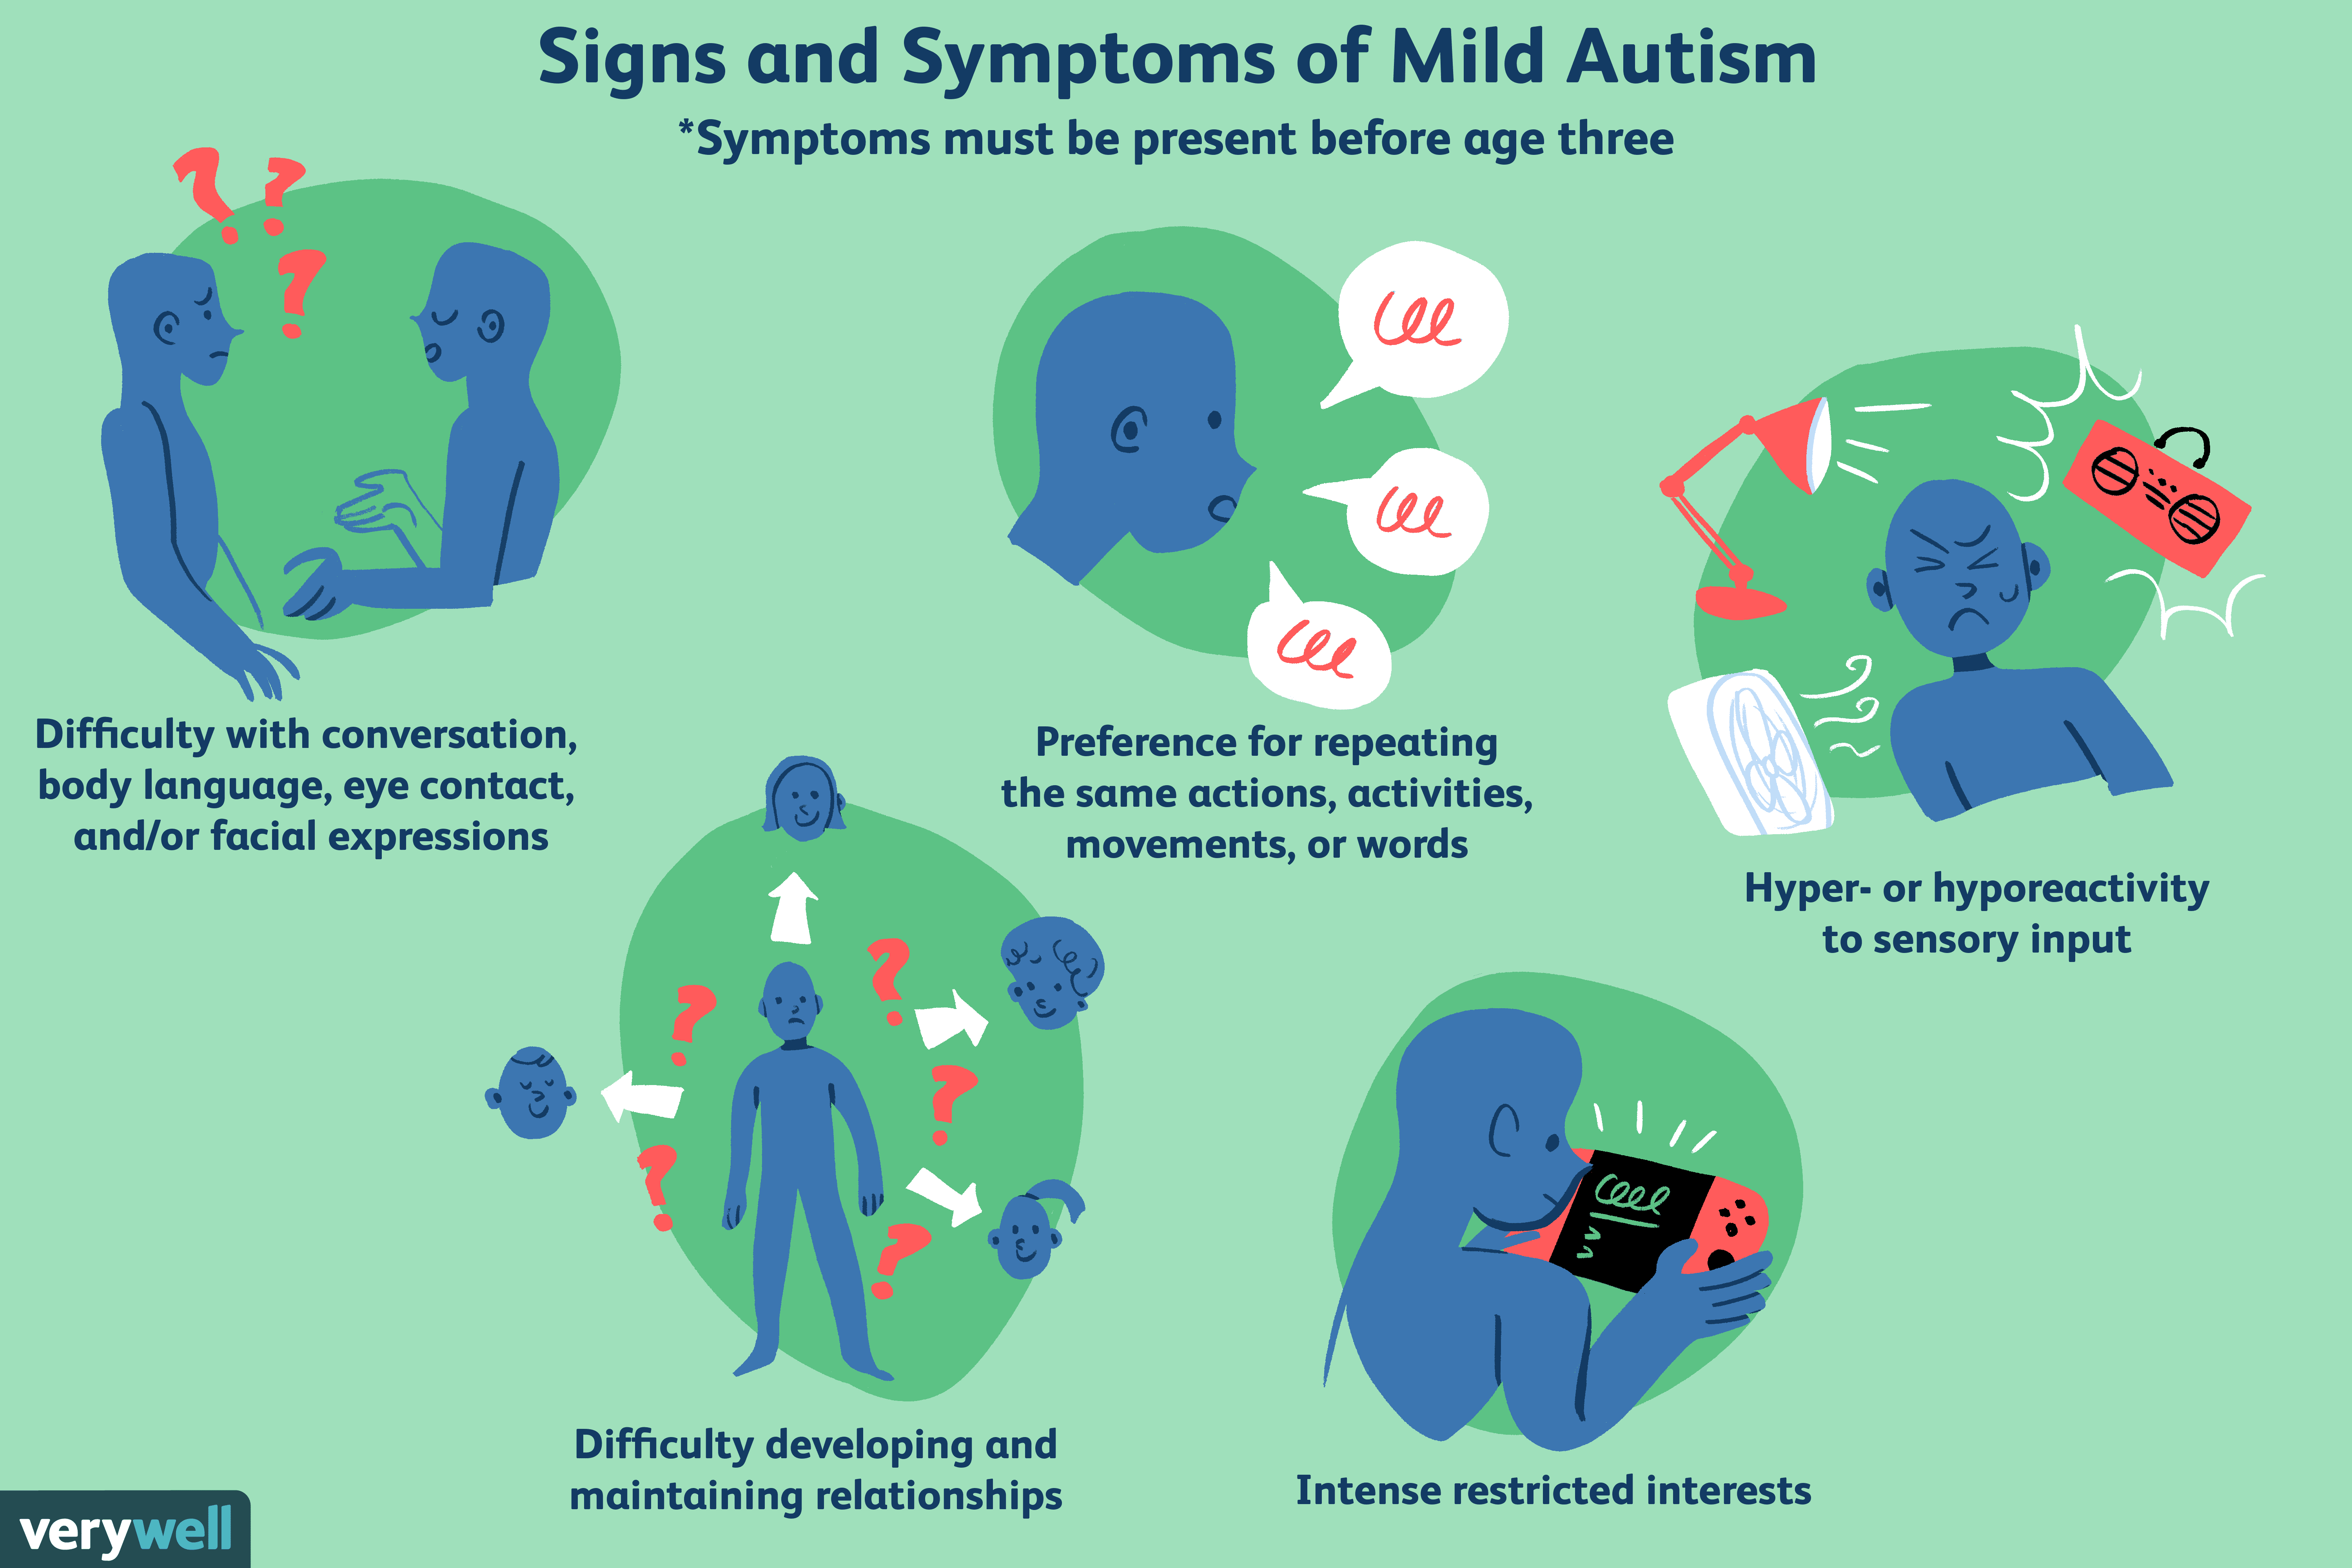 What Does Mild Autism Mean?